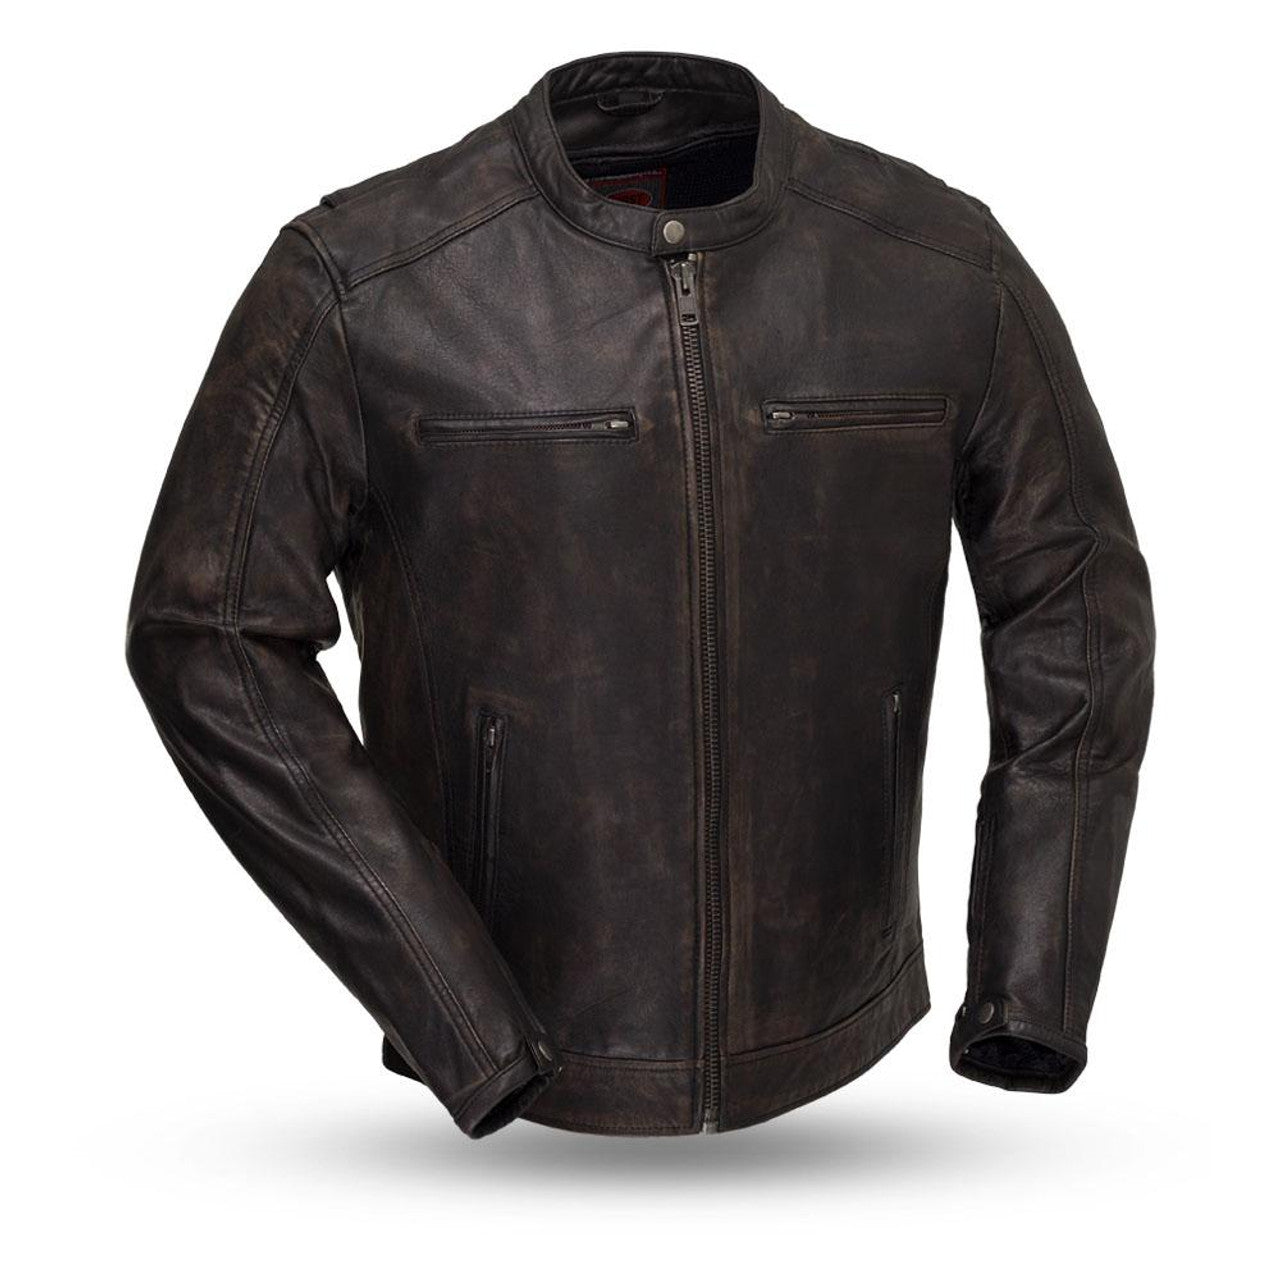 Hipster Men's Motorcycle Leather Jacket Size LARGE - Final Sale Ships ...